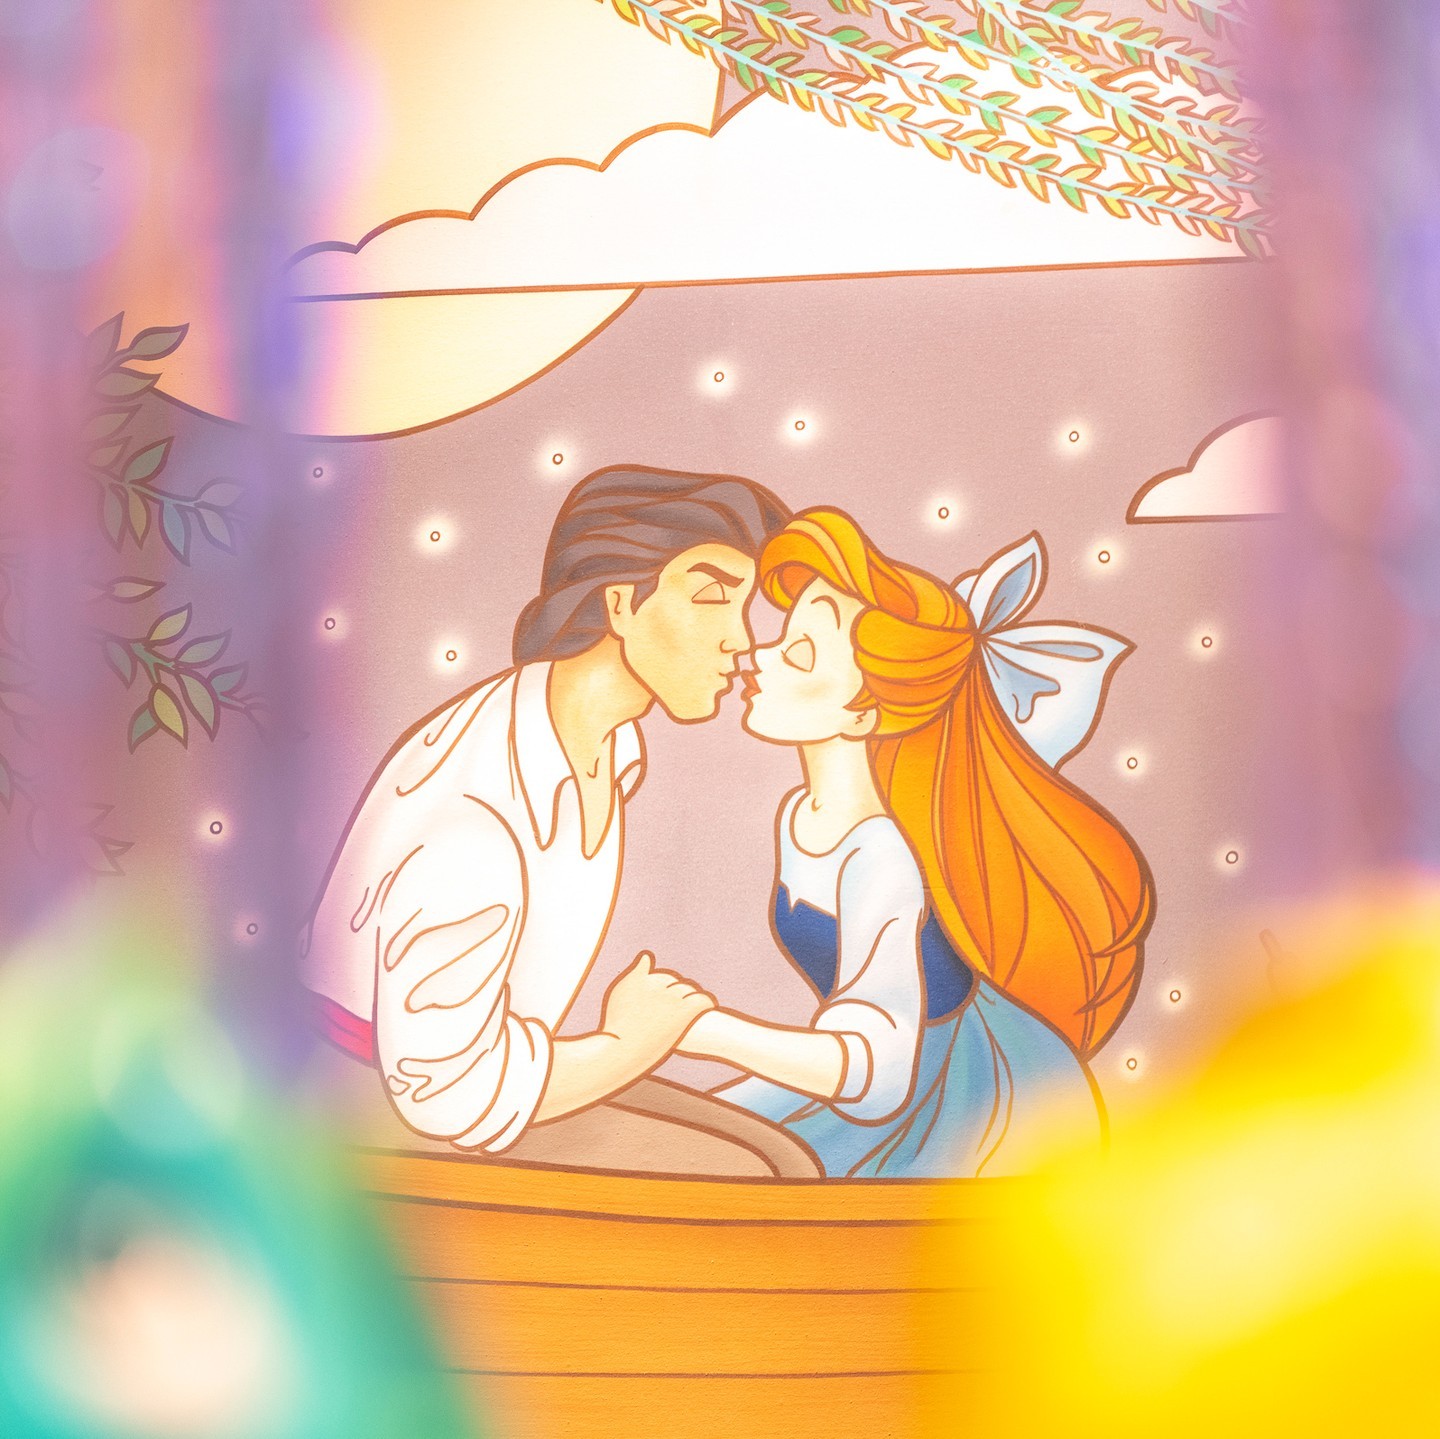 True romance♡
この幸せよ、永遠に
#ariel #princeeric #thelittlemermaid #kissdegirlfashions...的图像